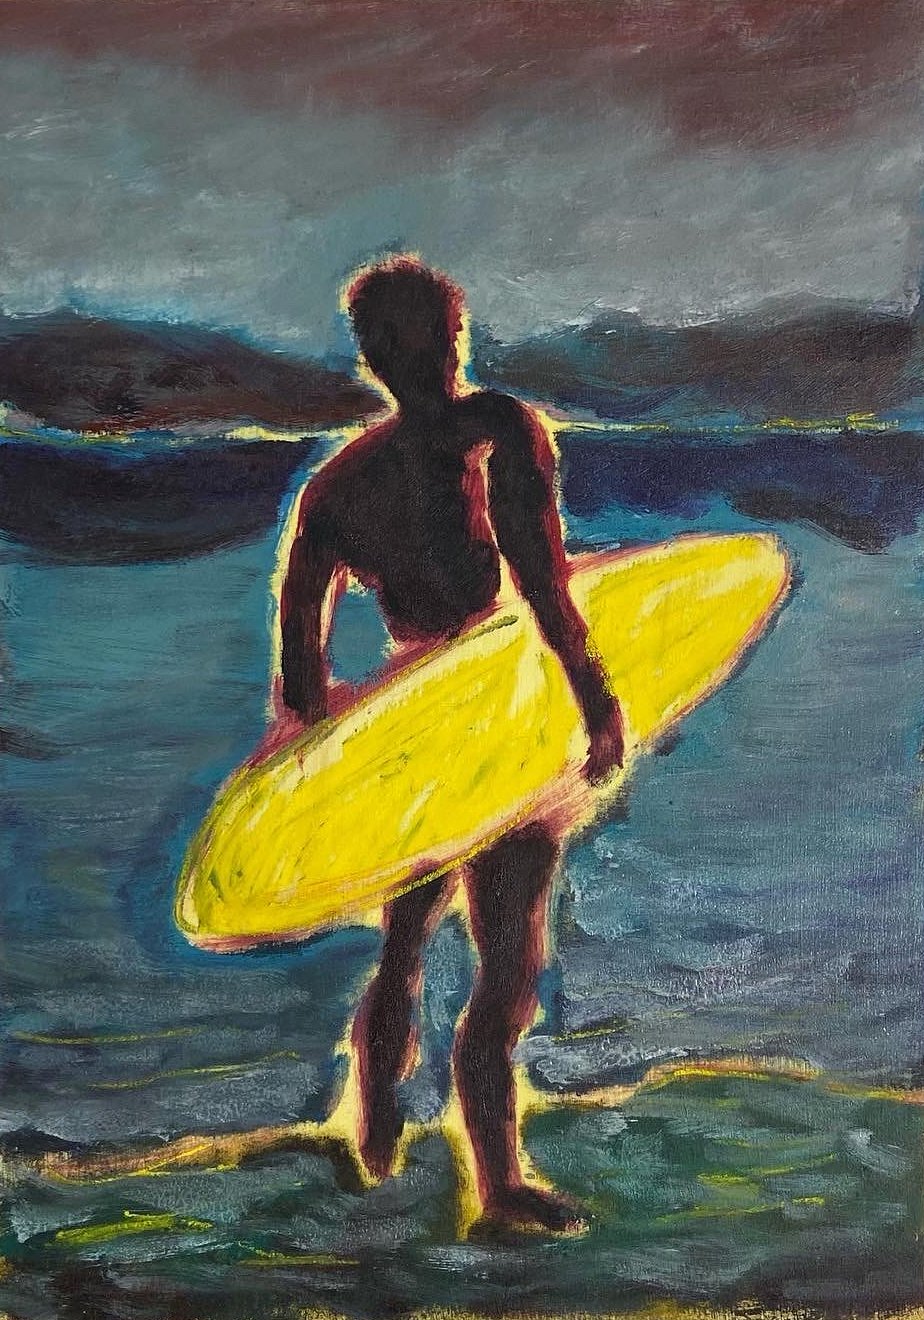 Surfer at La Caleta, 2020